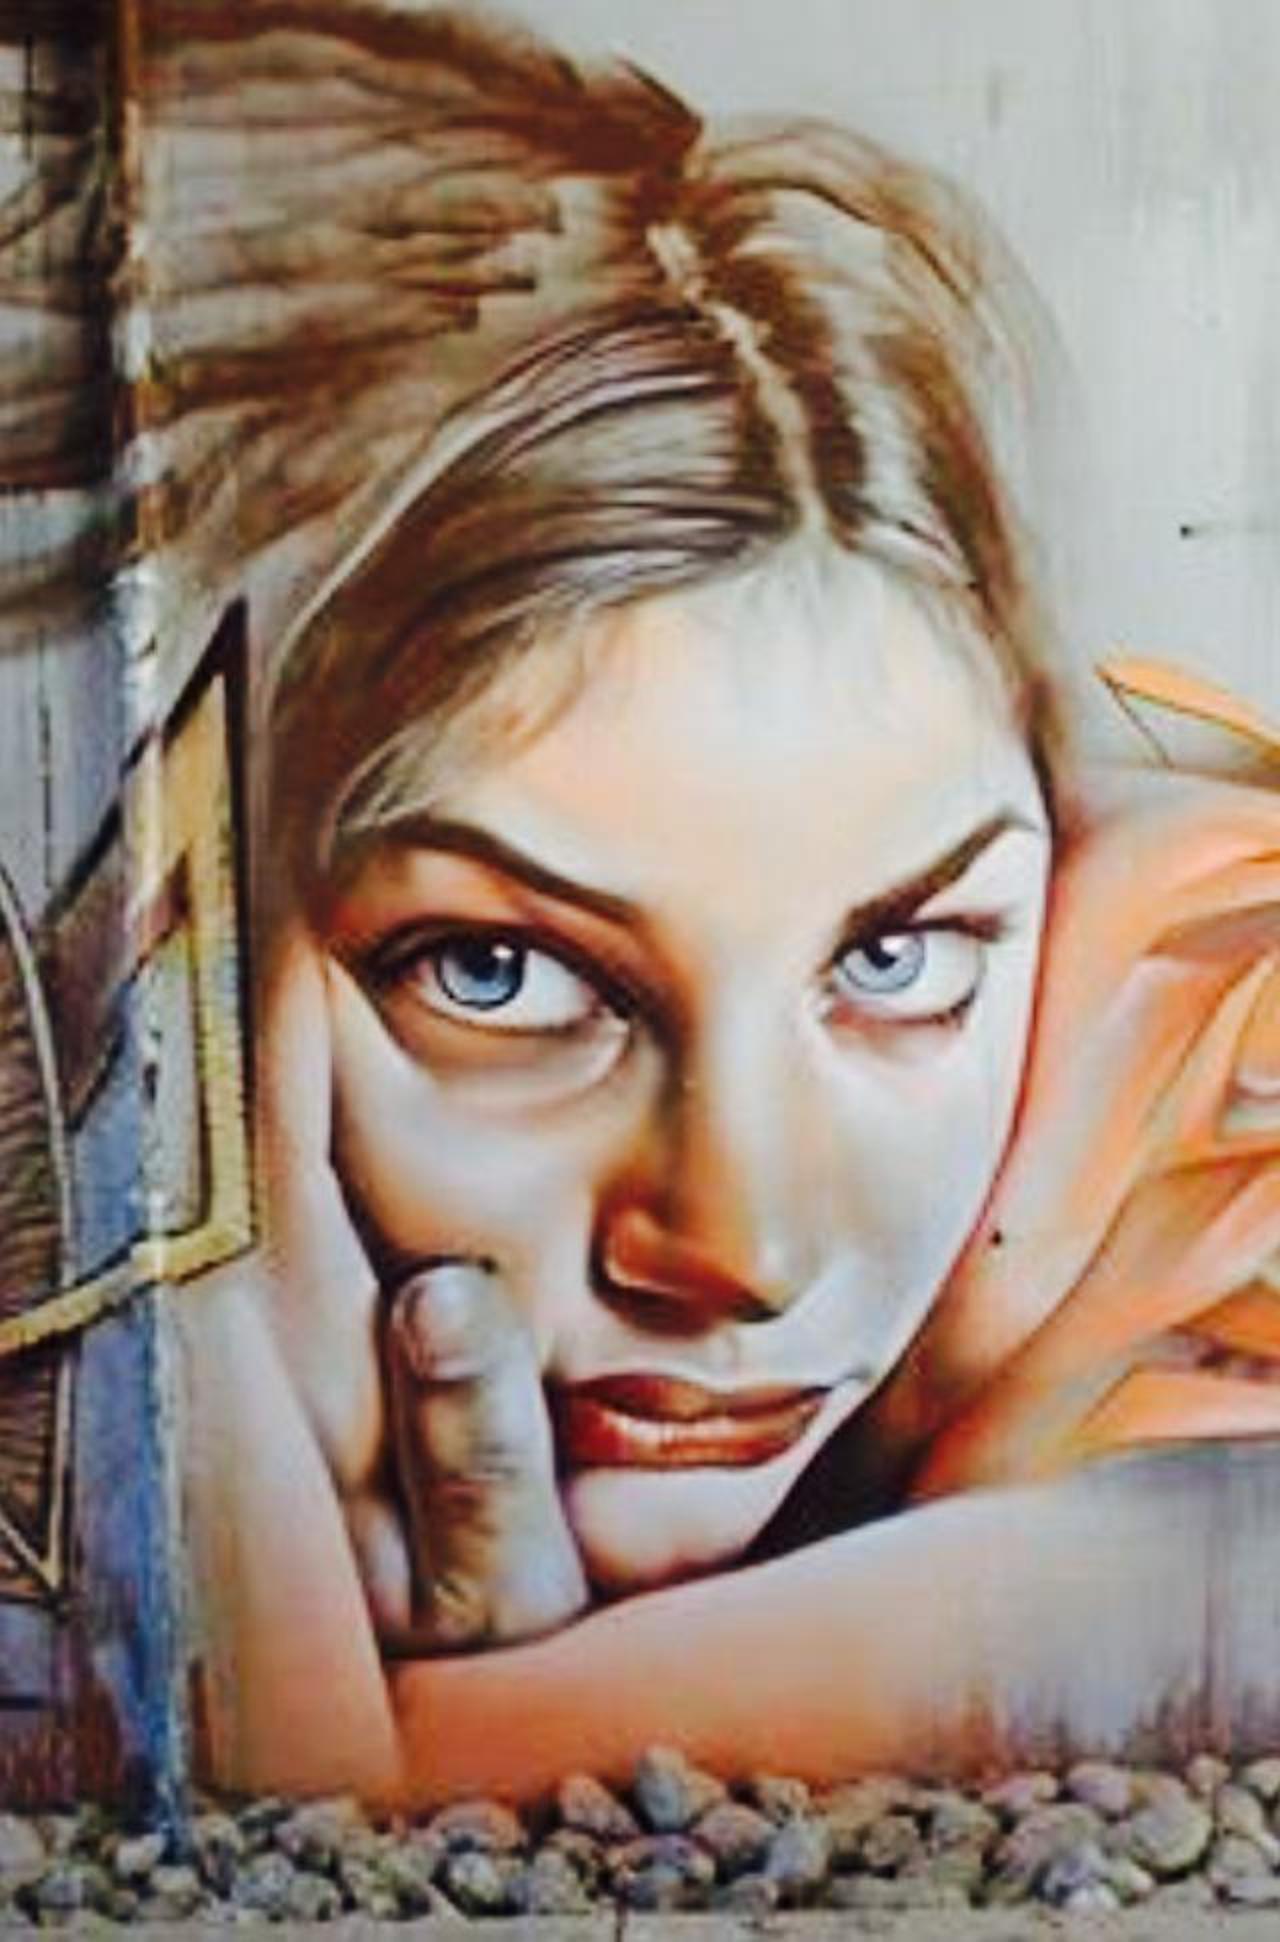 #sticker #stencilart #streetart #urbanart #murales #mural http://t.co/FcpIPviXDk